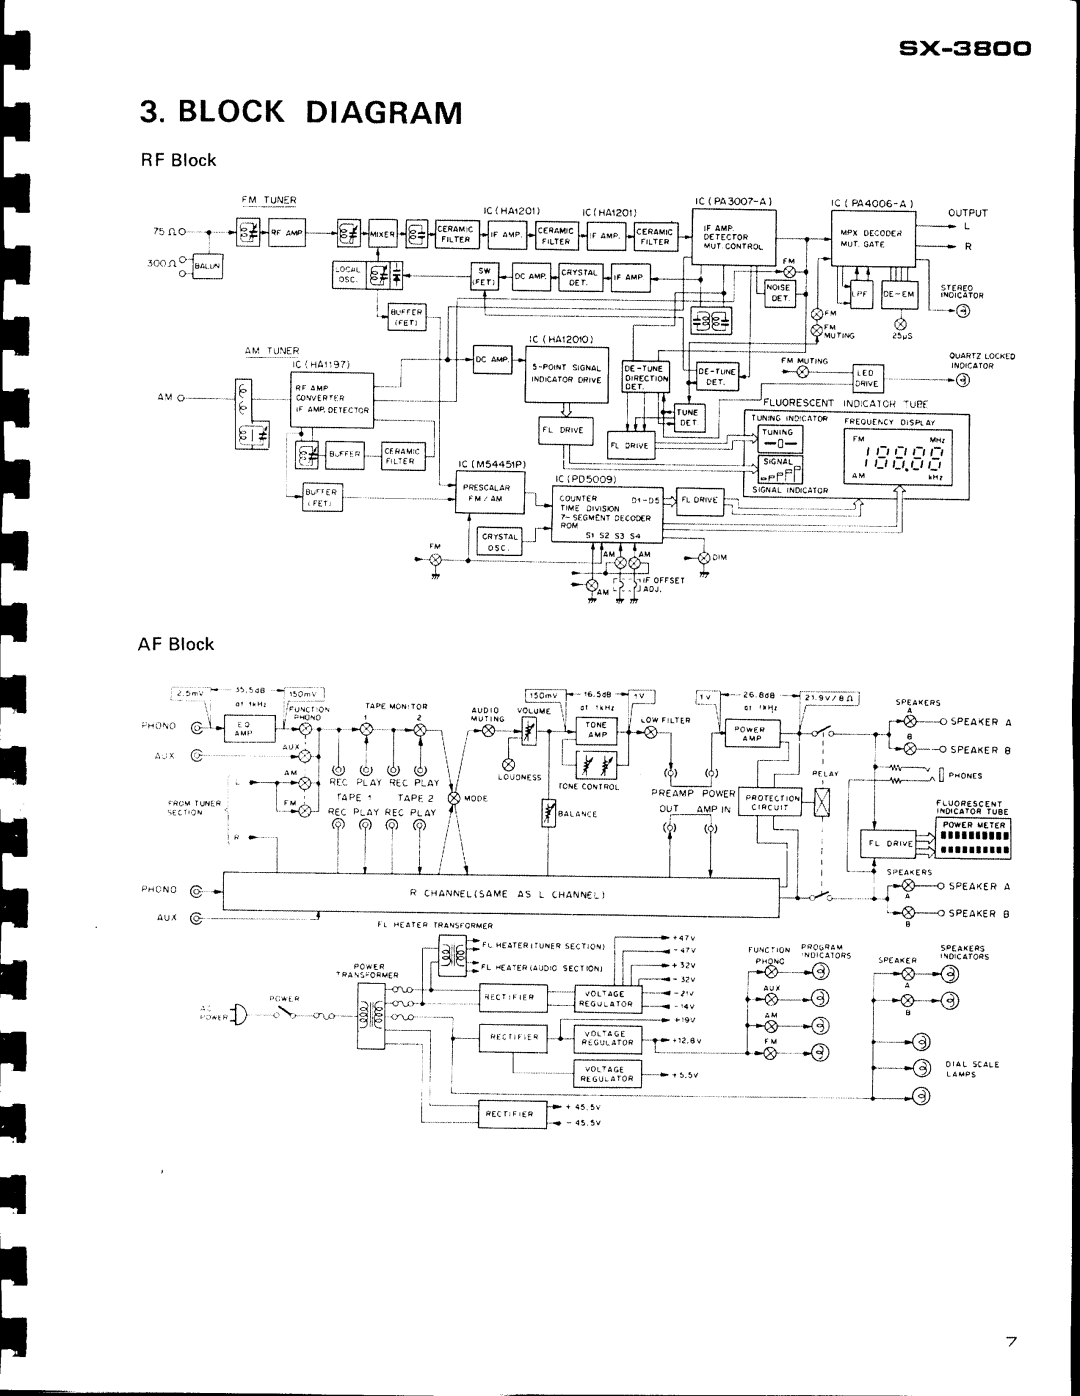 Pioneer SX-3800 manual f-*--e, Block Diagram, six-3aoo, 9--@, 6 -@, 1l , or i n, 1-a--@ f--q-*@, l-8 -O, lhTjl, l-68-ll 